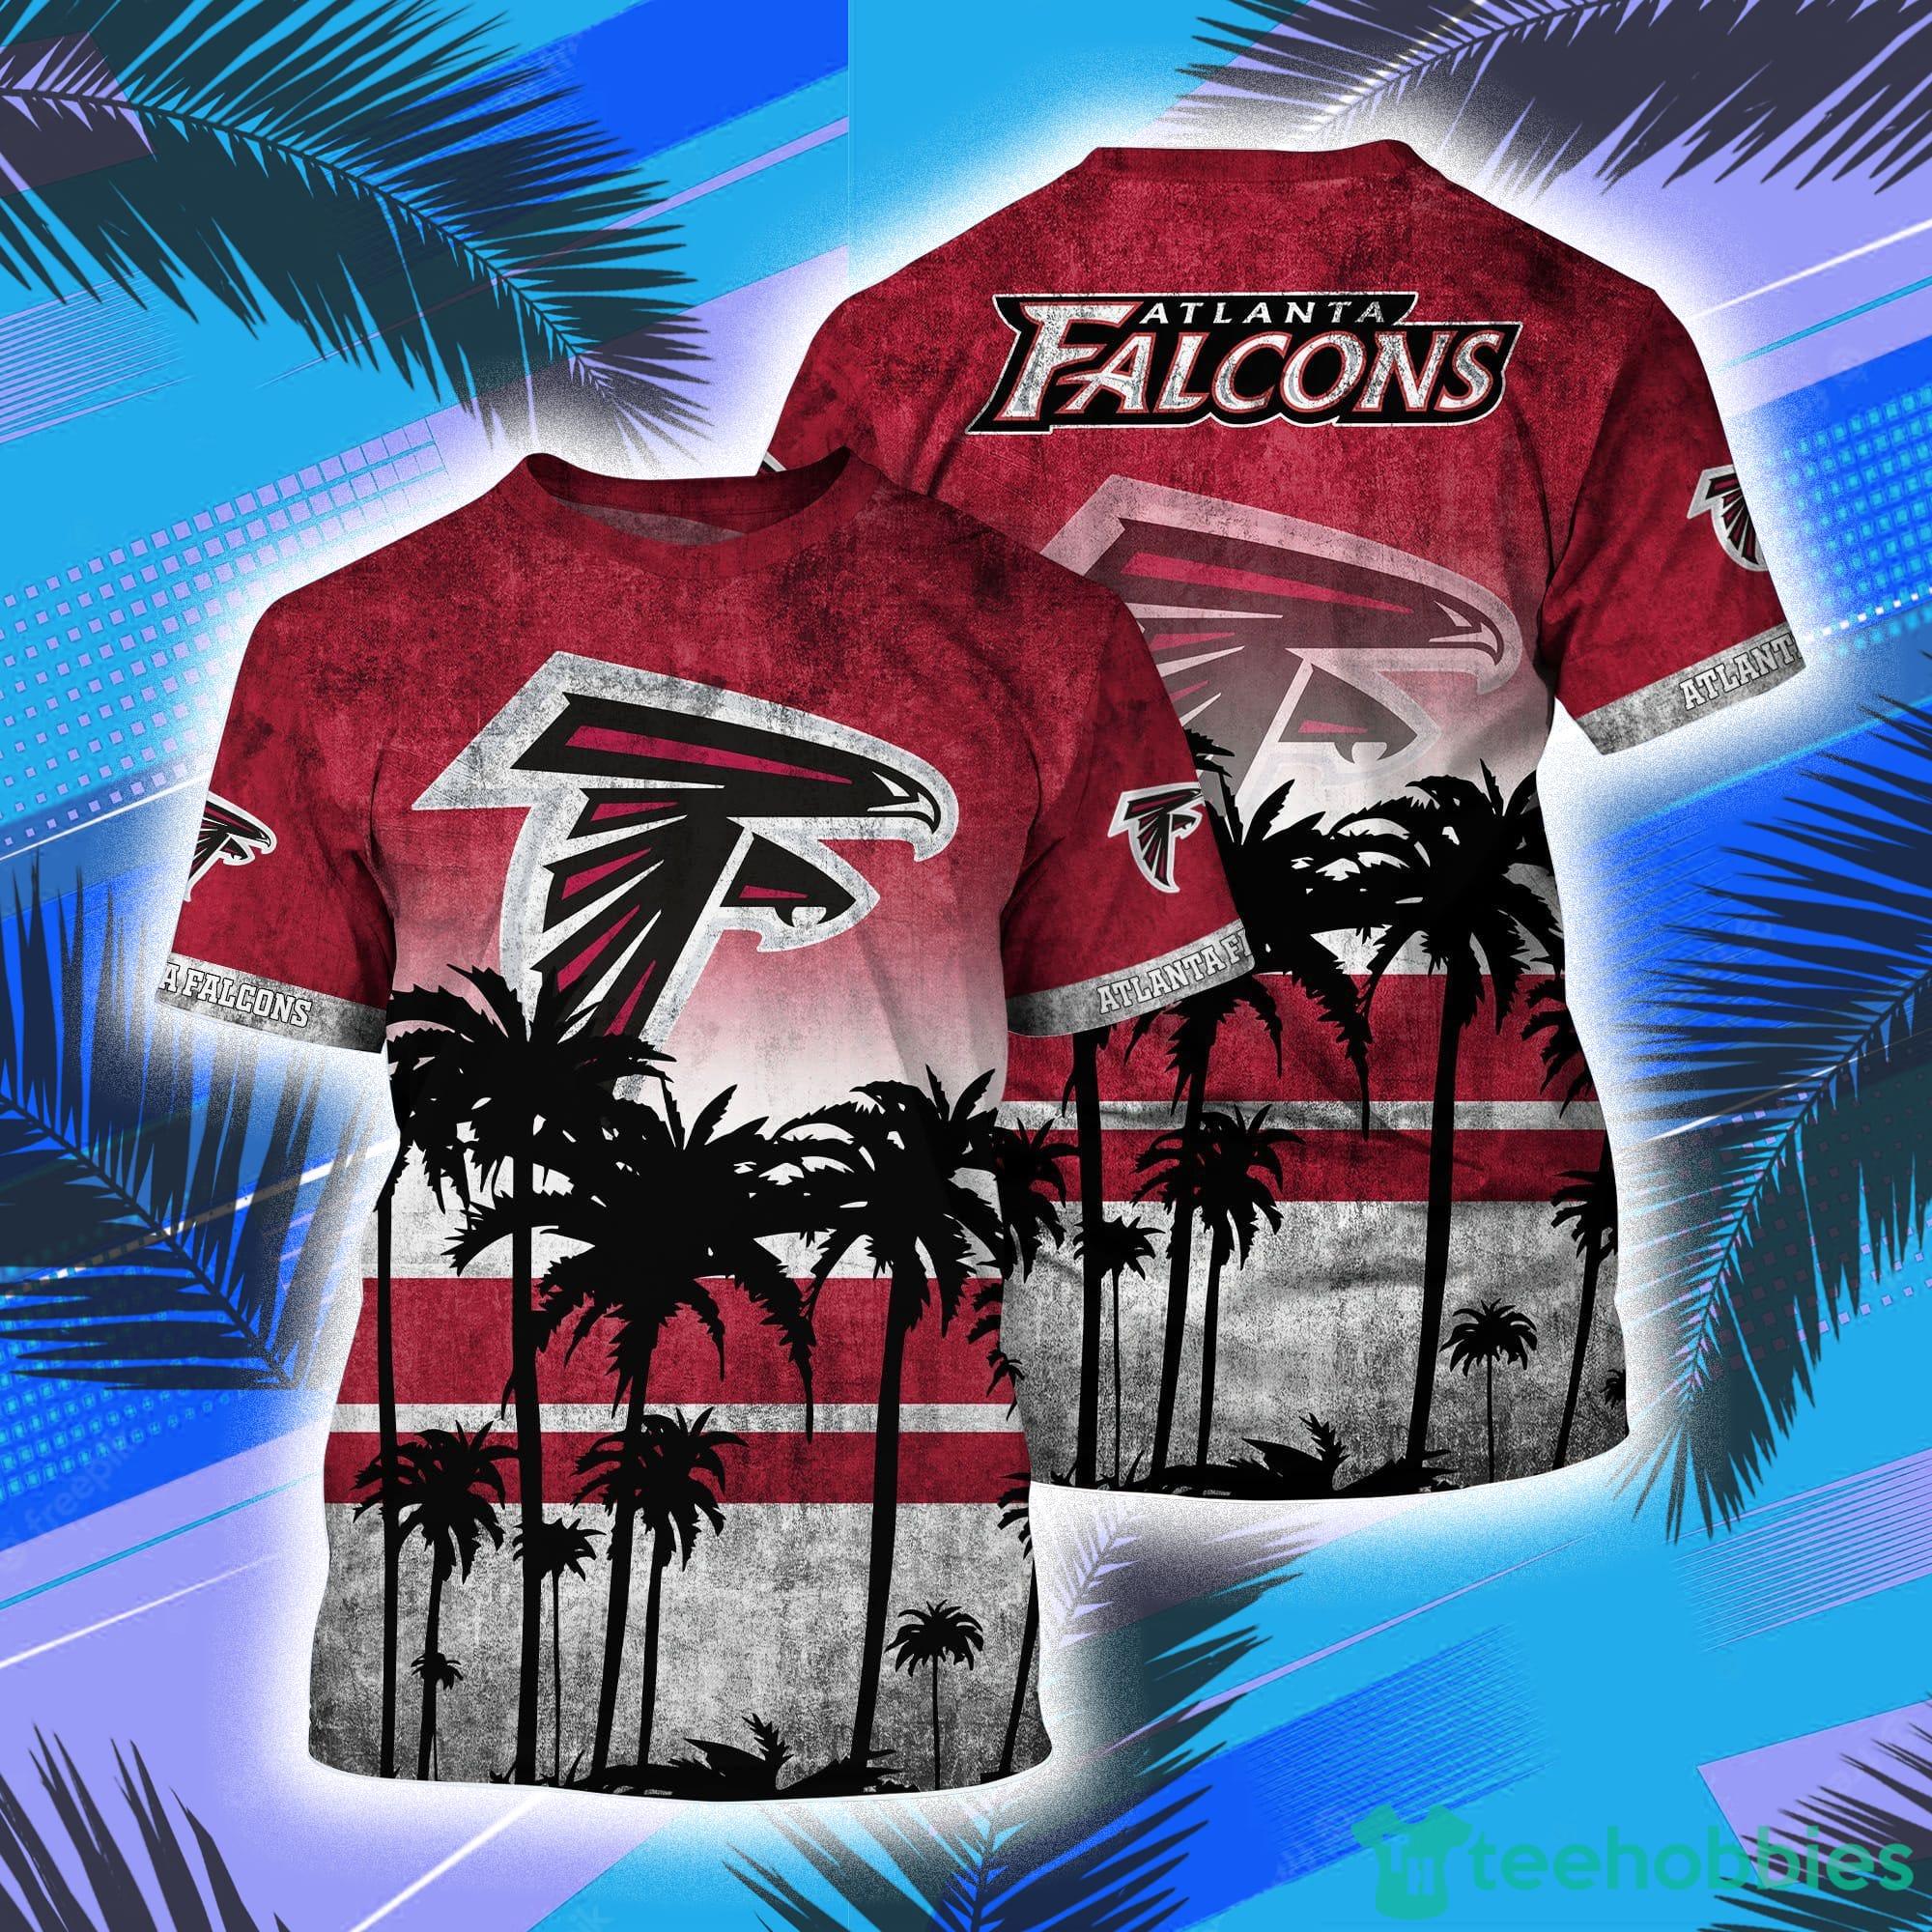 falcons t shirts